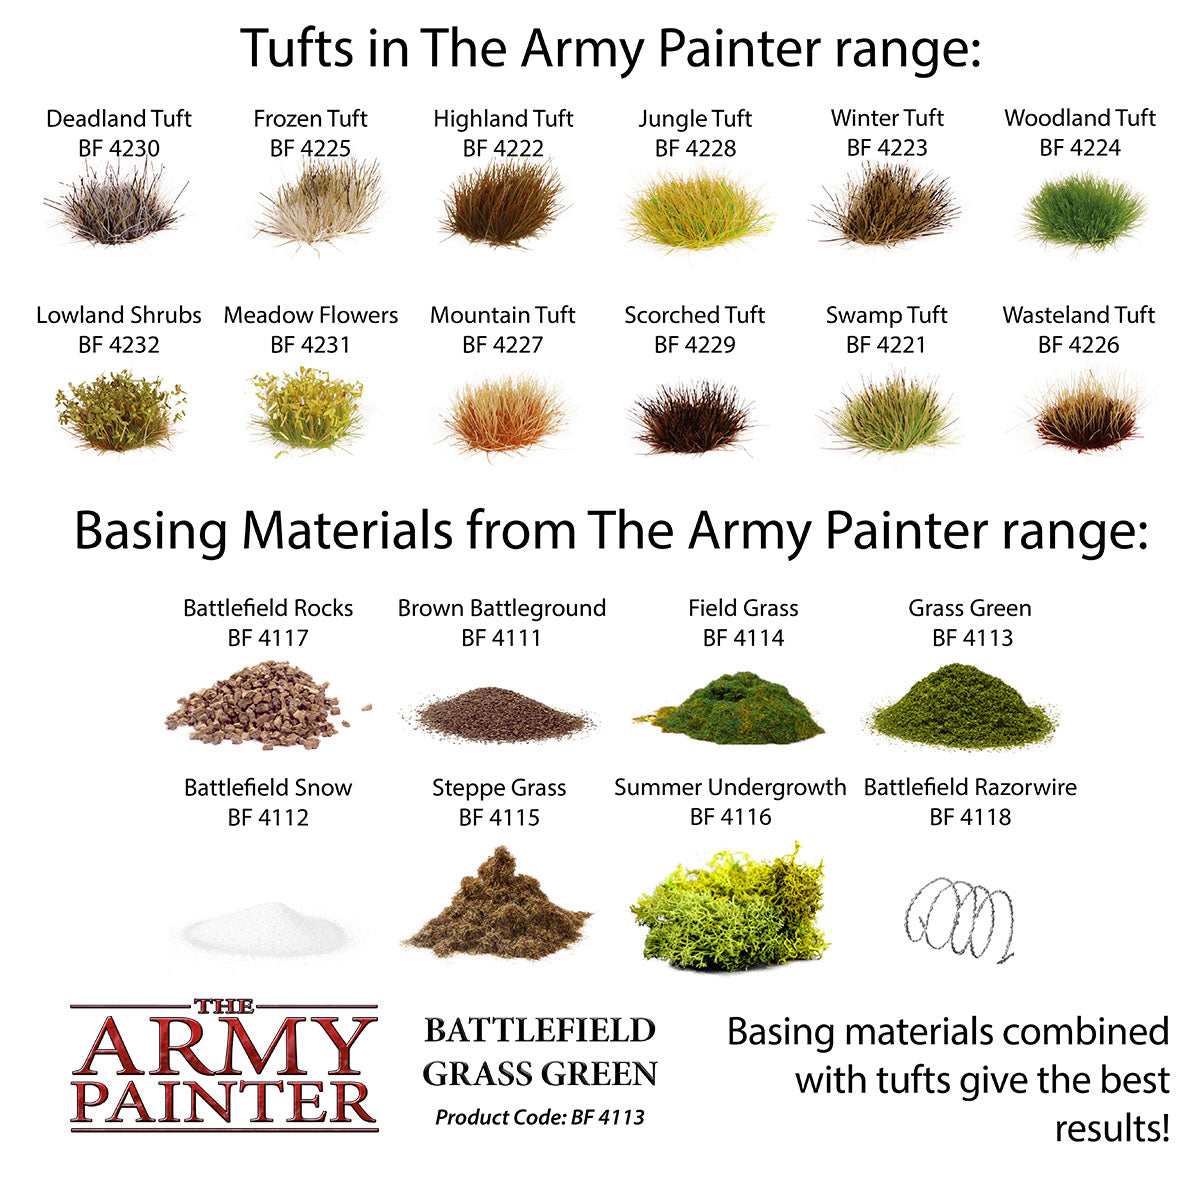 The Army Painter - Battlefield Grass Green BF4113